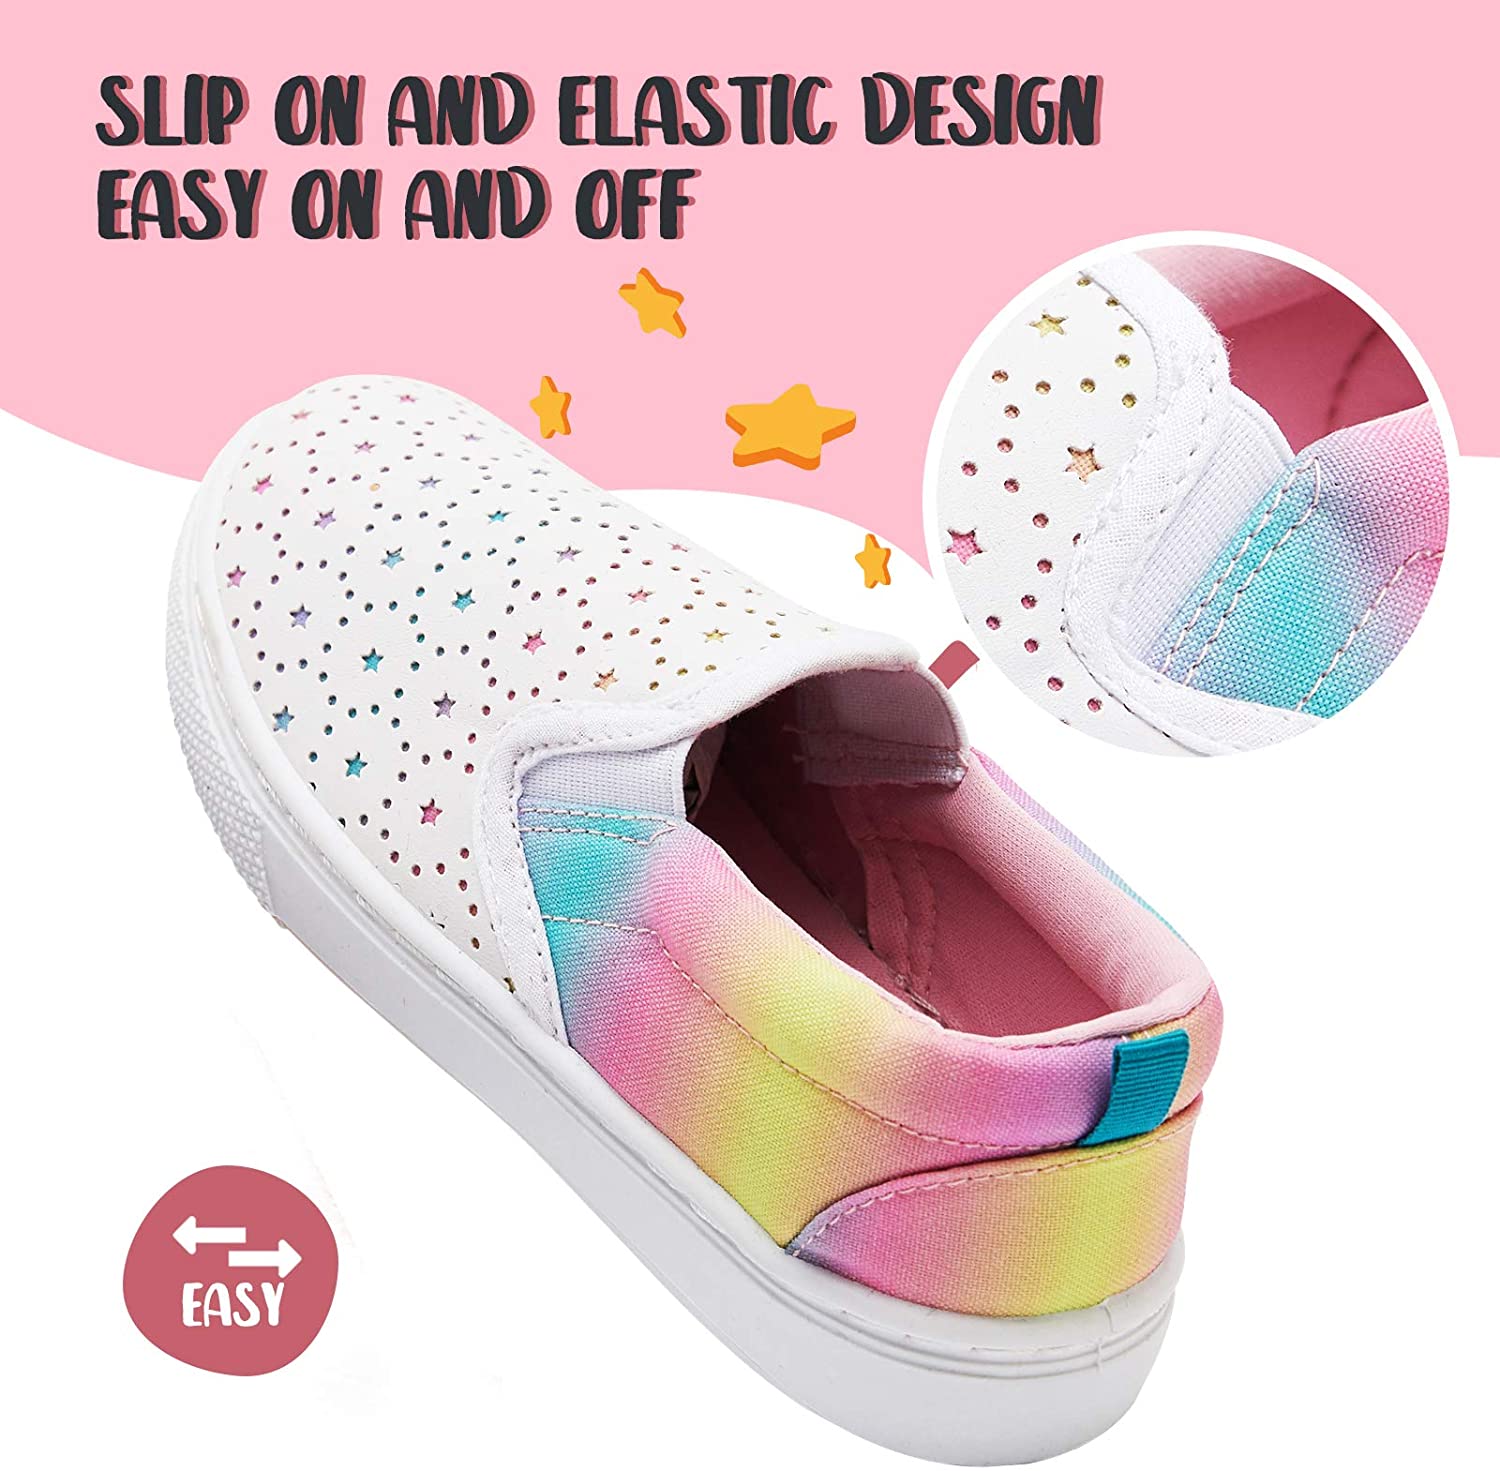 K KomForme Toddler Girls &amp; Boys Slip On Canvas Sneakers Loafers Moccasins Kids Tennis Shoes